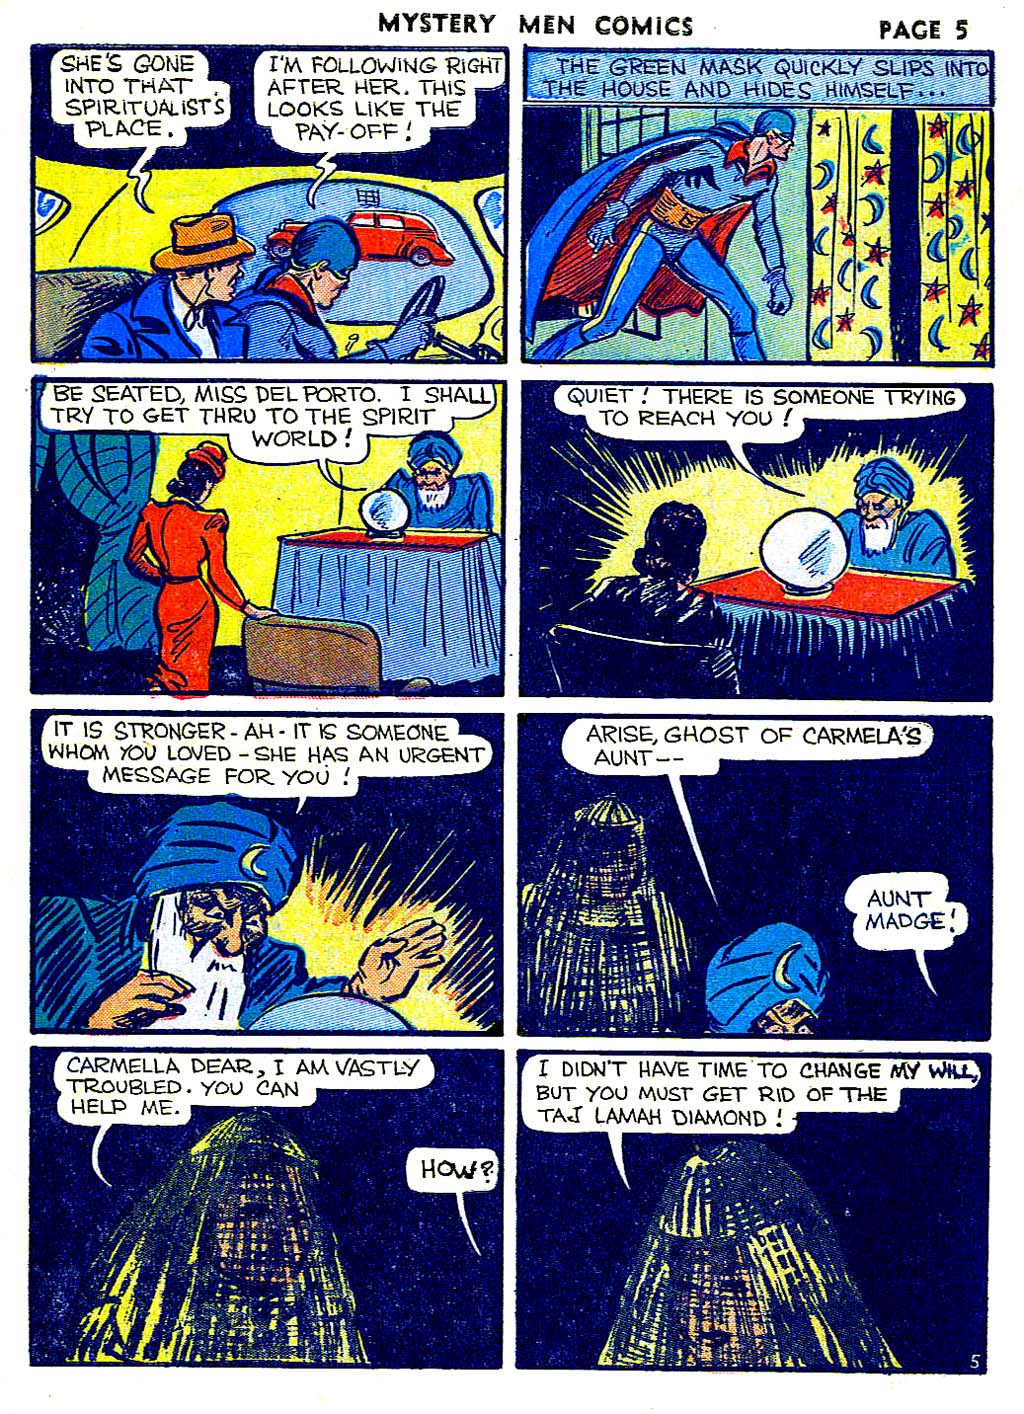 Read online Mystery Men Comics comic -  Issue #6 - 7